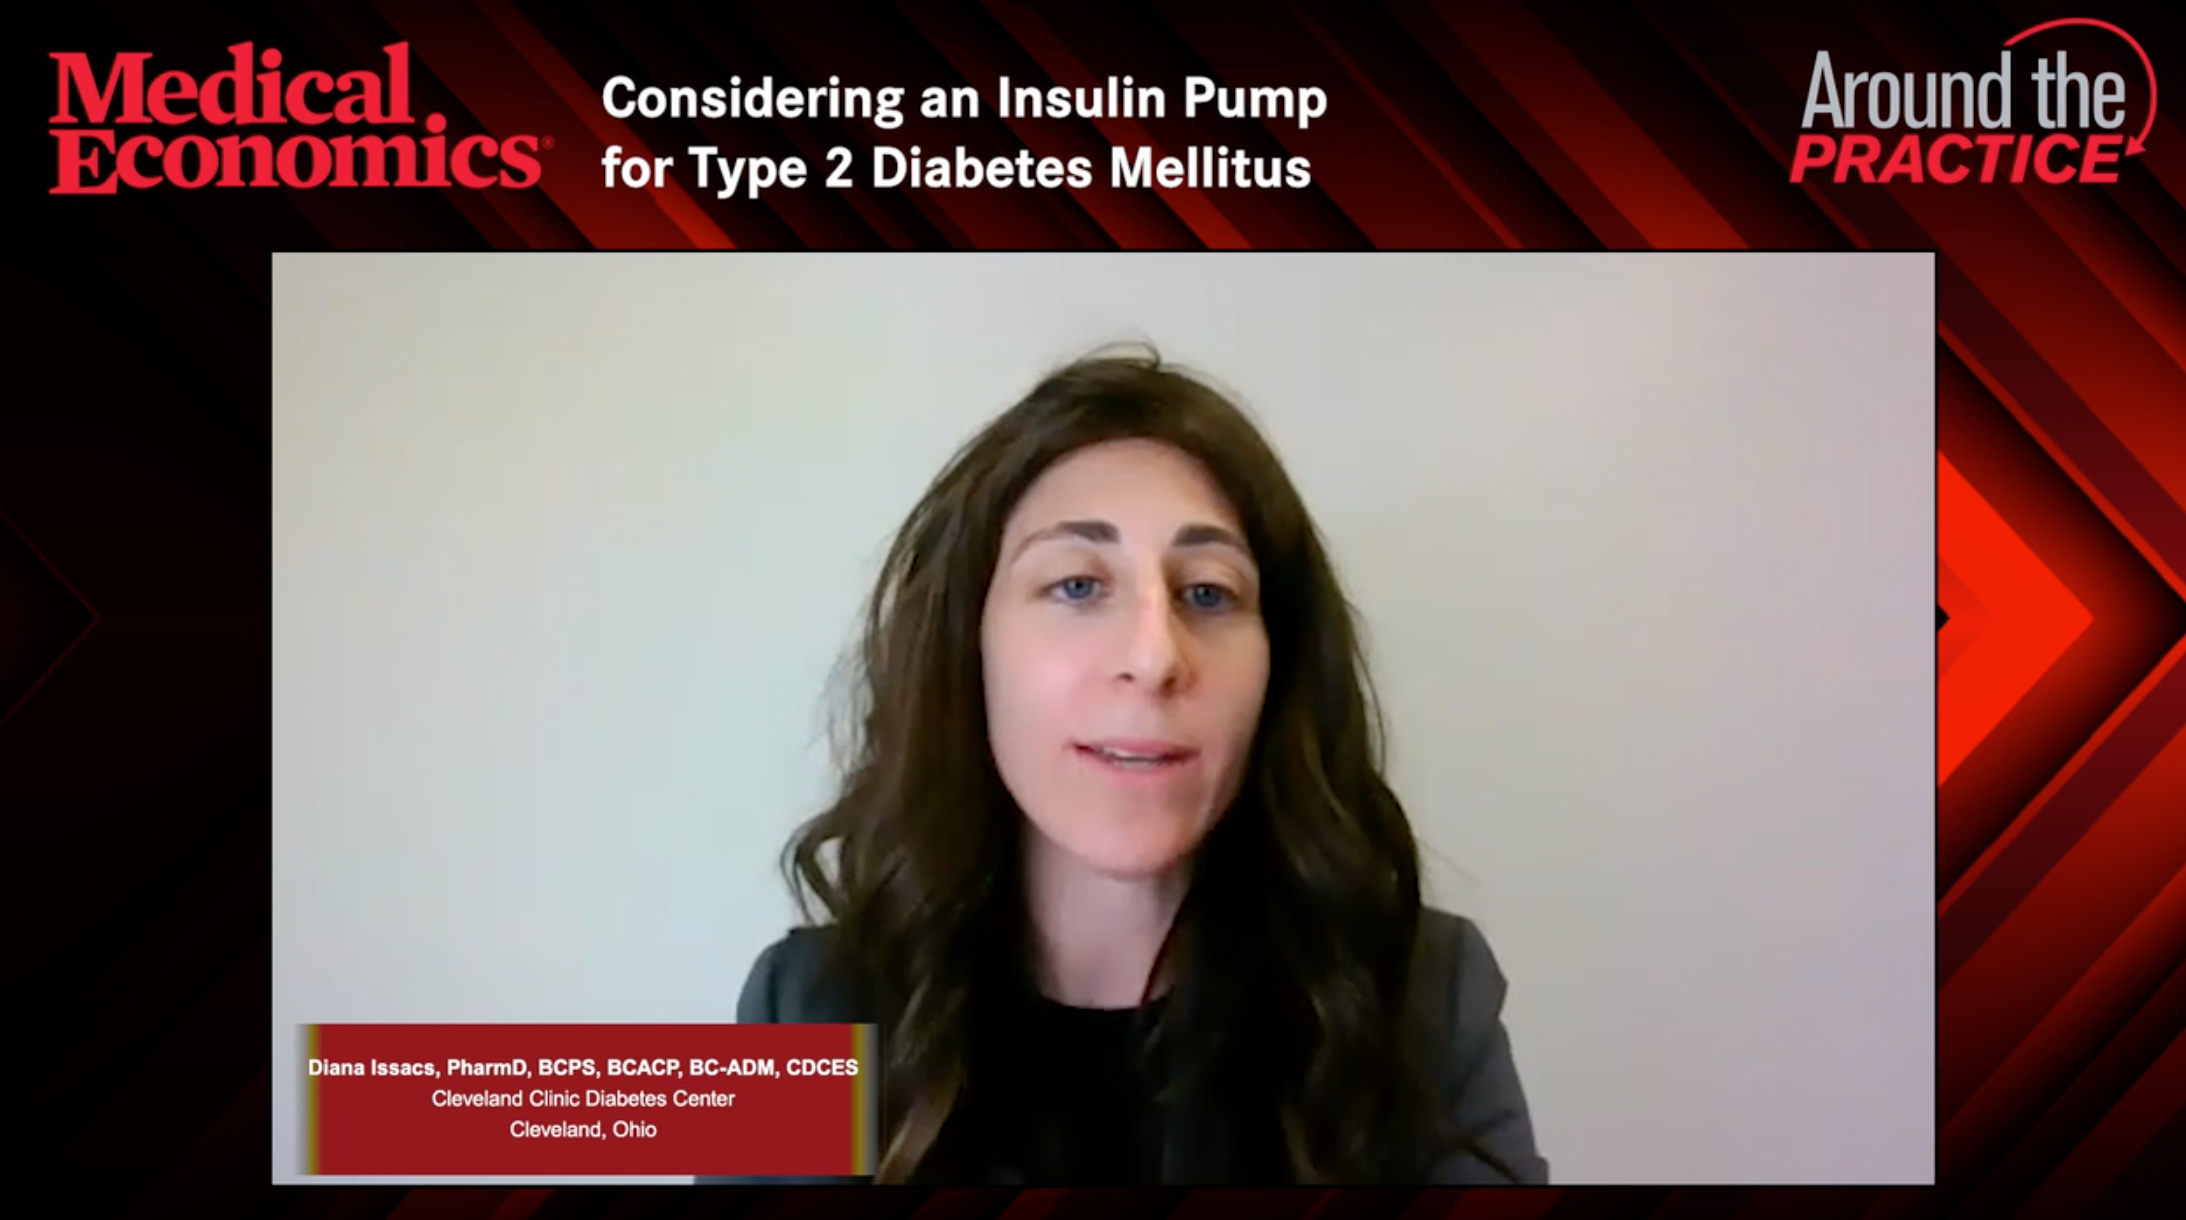 Benefits of Technology of Insulin Pumps